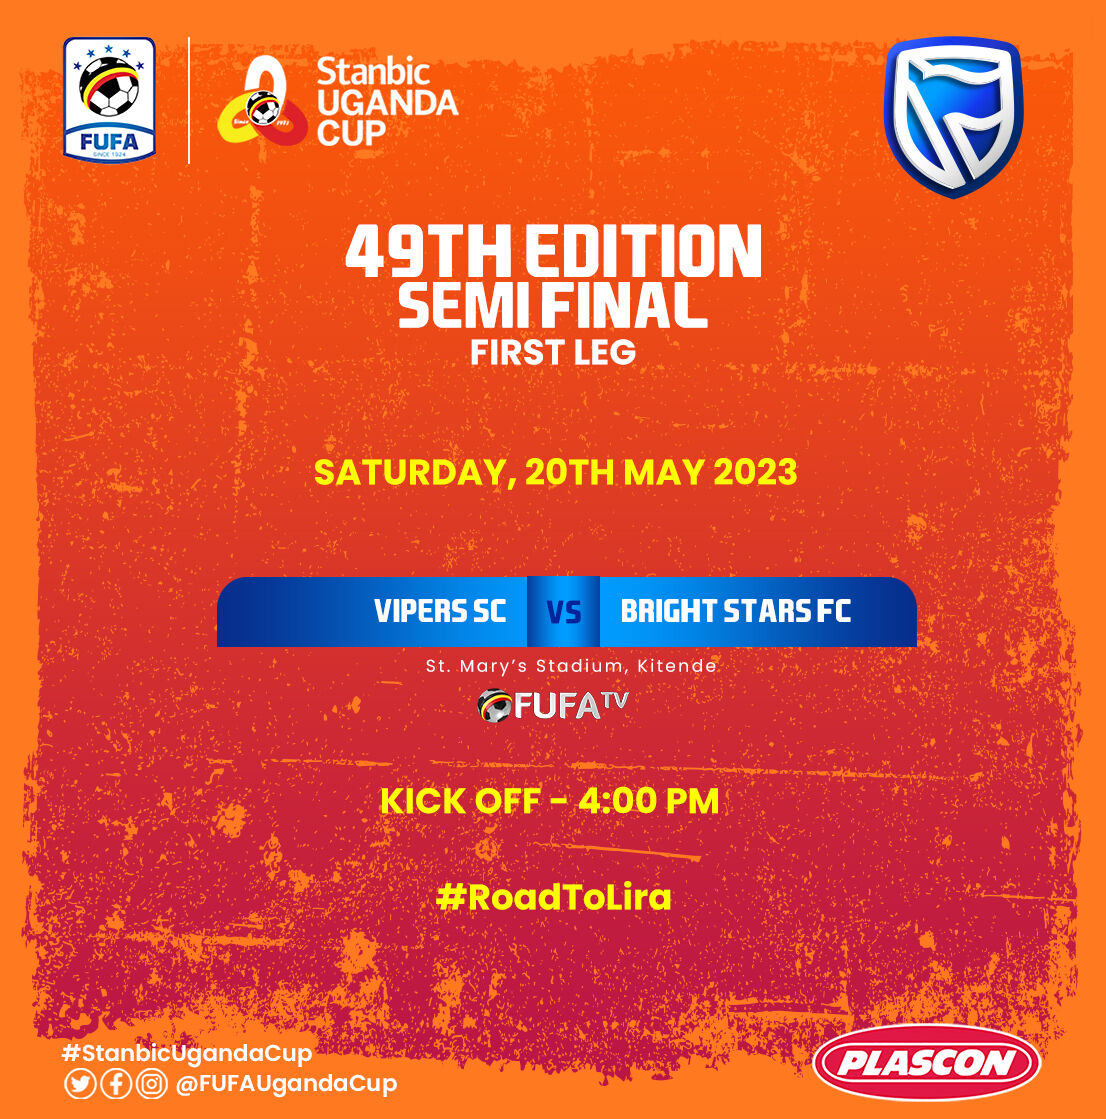 Today at St. Mary's Stadium, Kitende

#StanbicUgandaCup | #RoadToLira